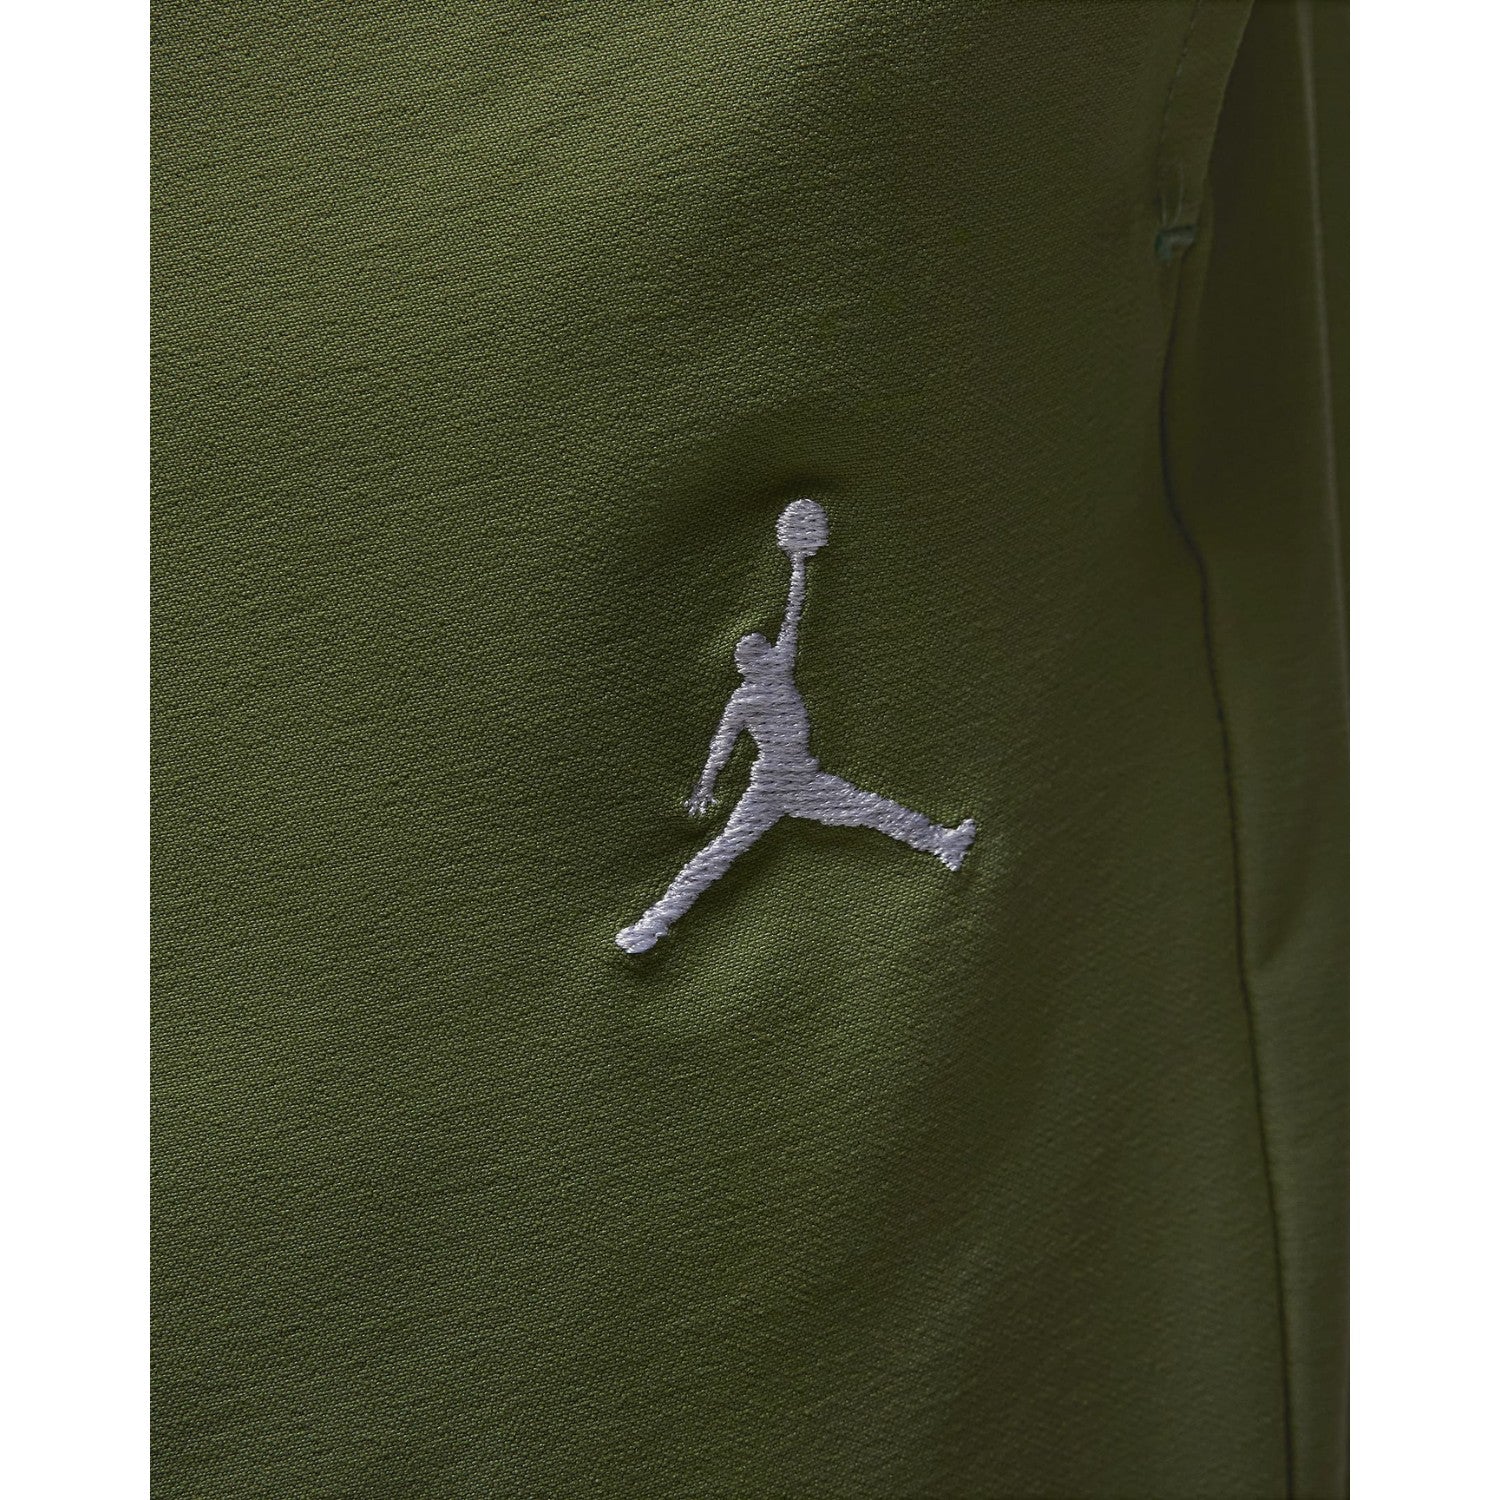 Jordan Essentials Men's Cropped Pants Mens Style : Fb7325